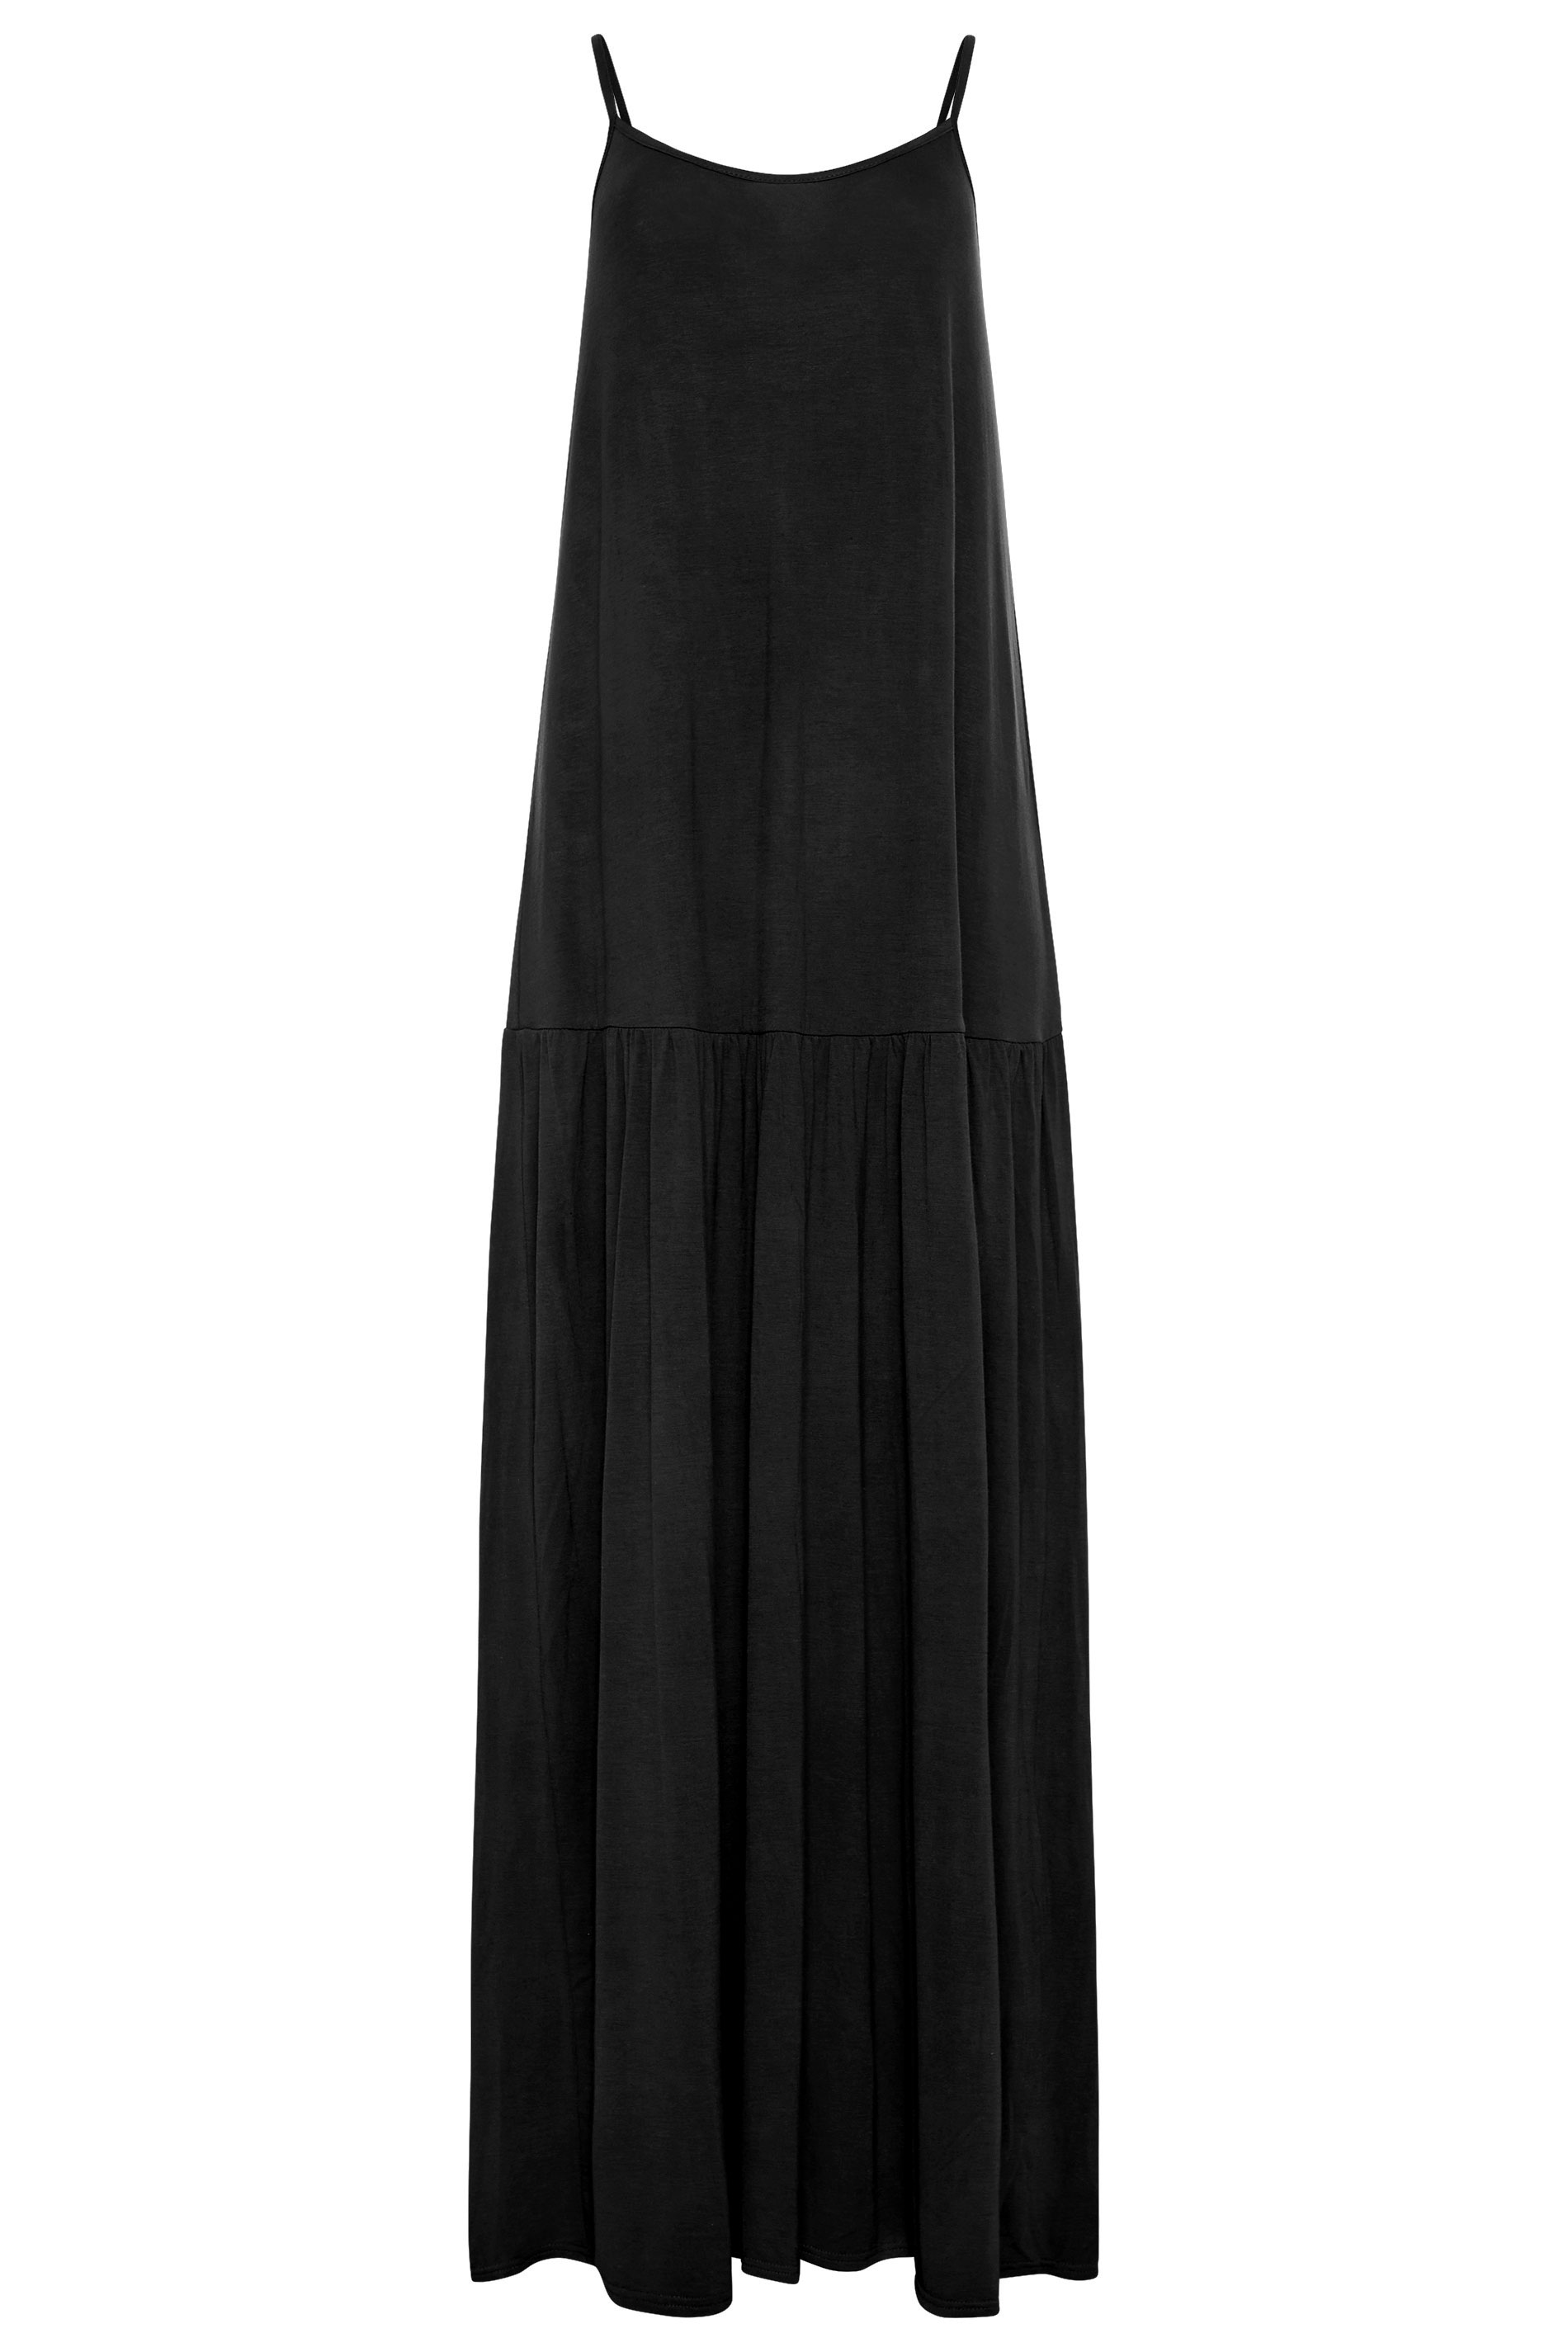 LTS Black Strappy Drop Waist Maxi Dress | Long Tall Sally